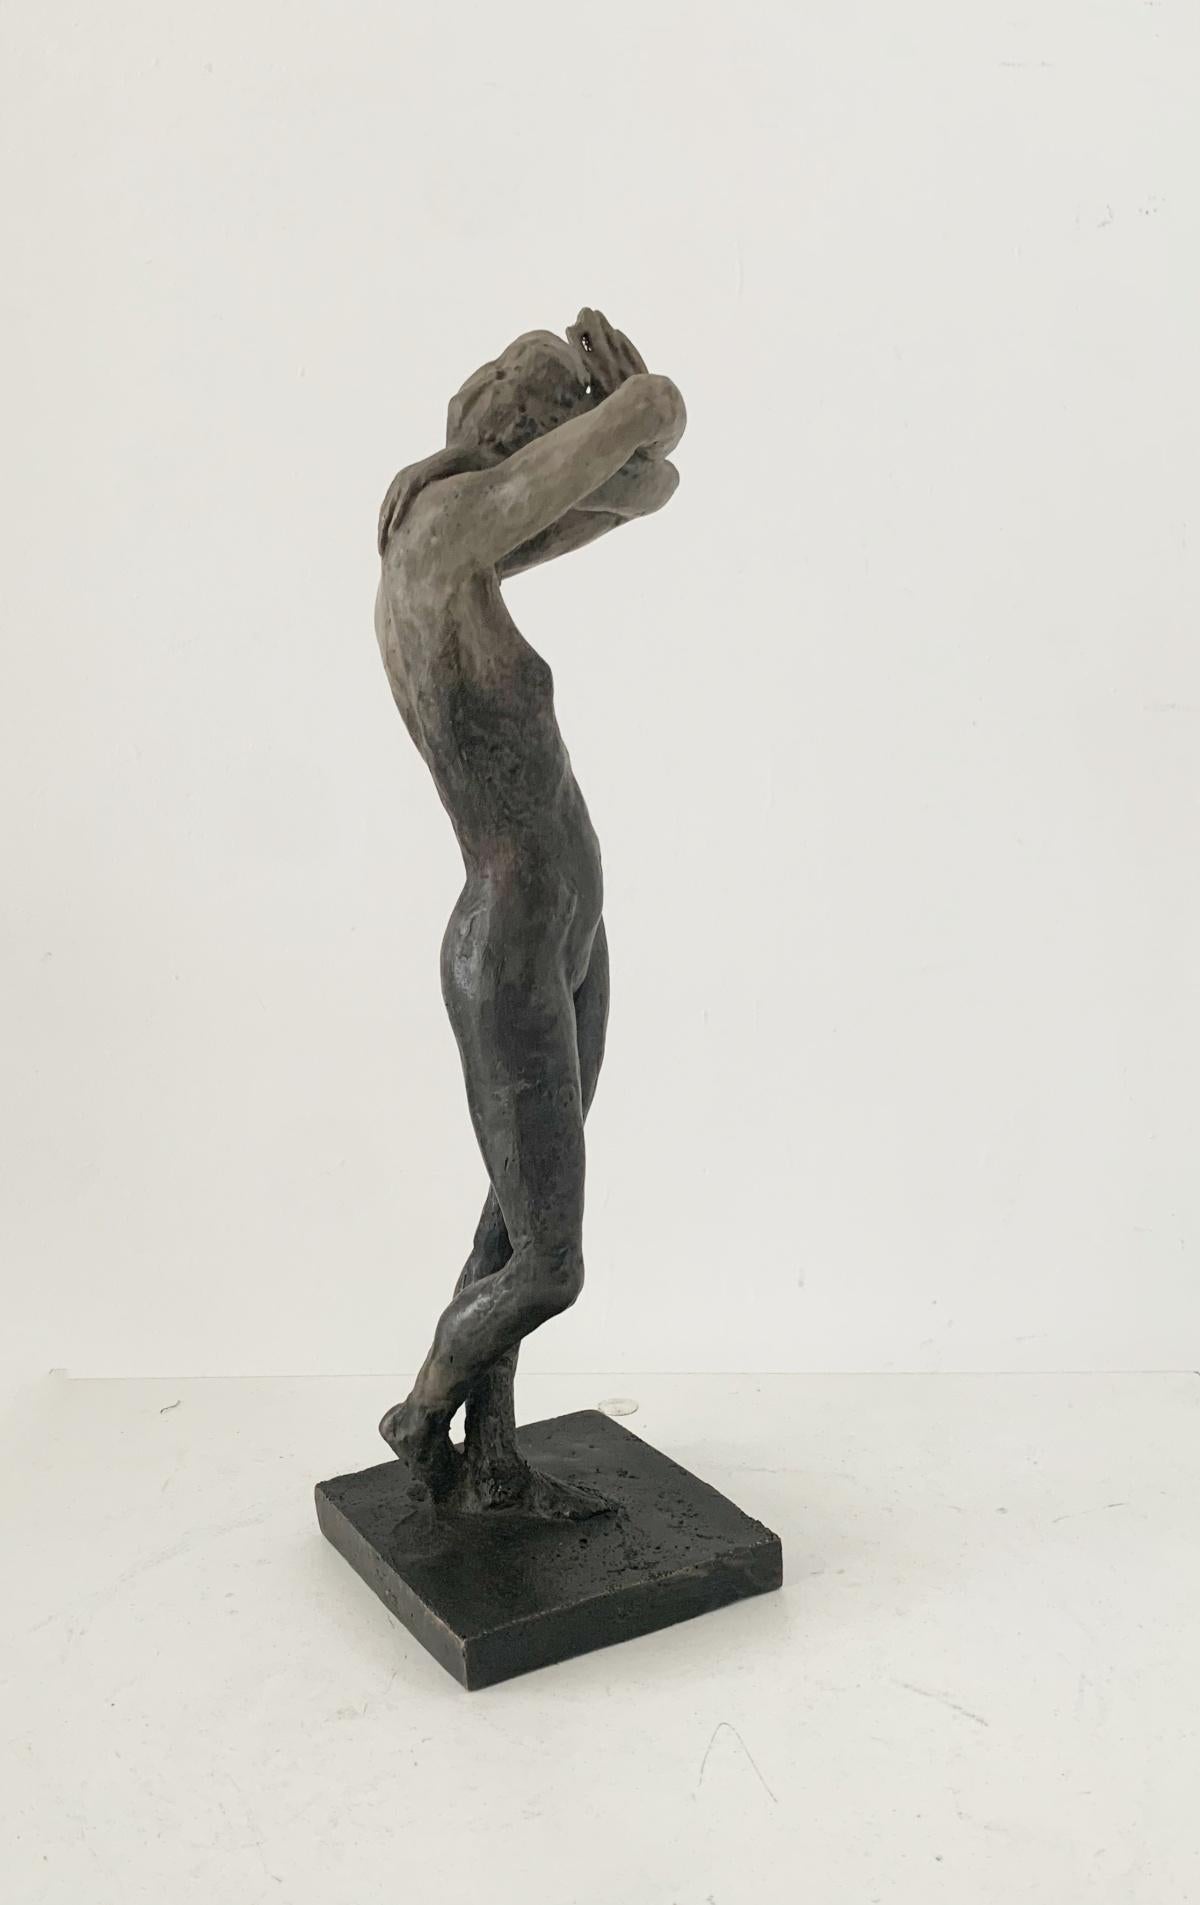 polishing bronze sculpture